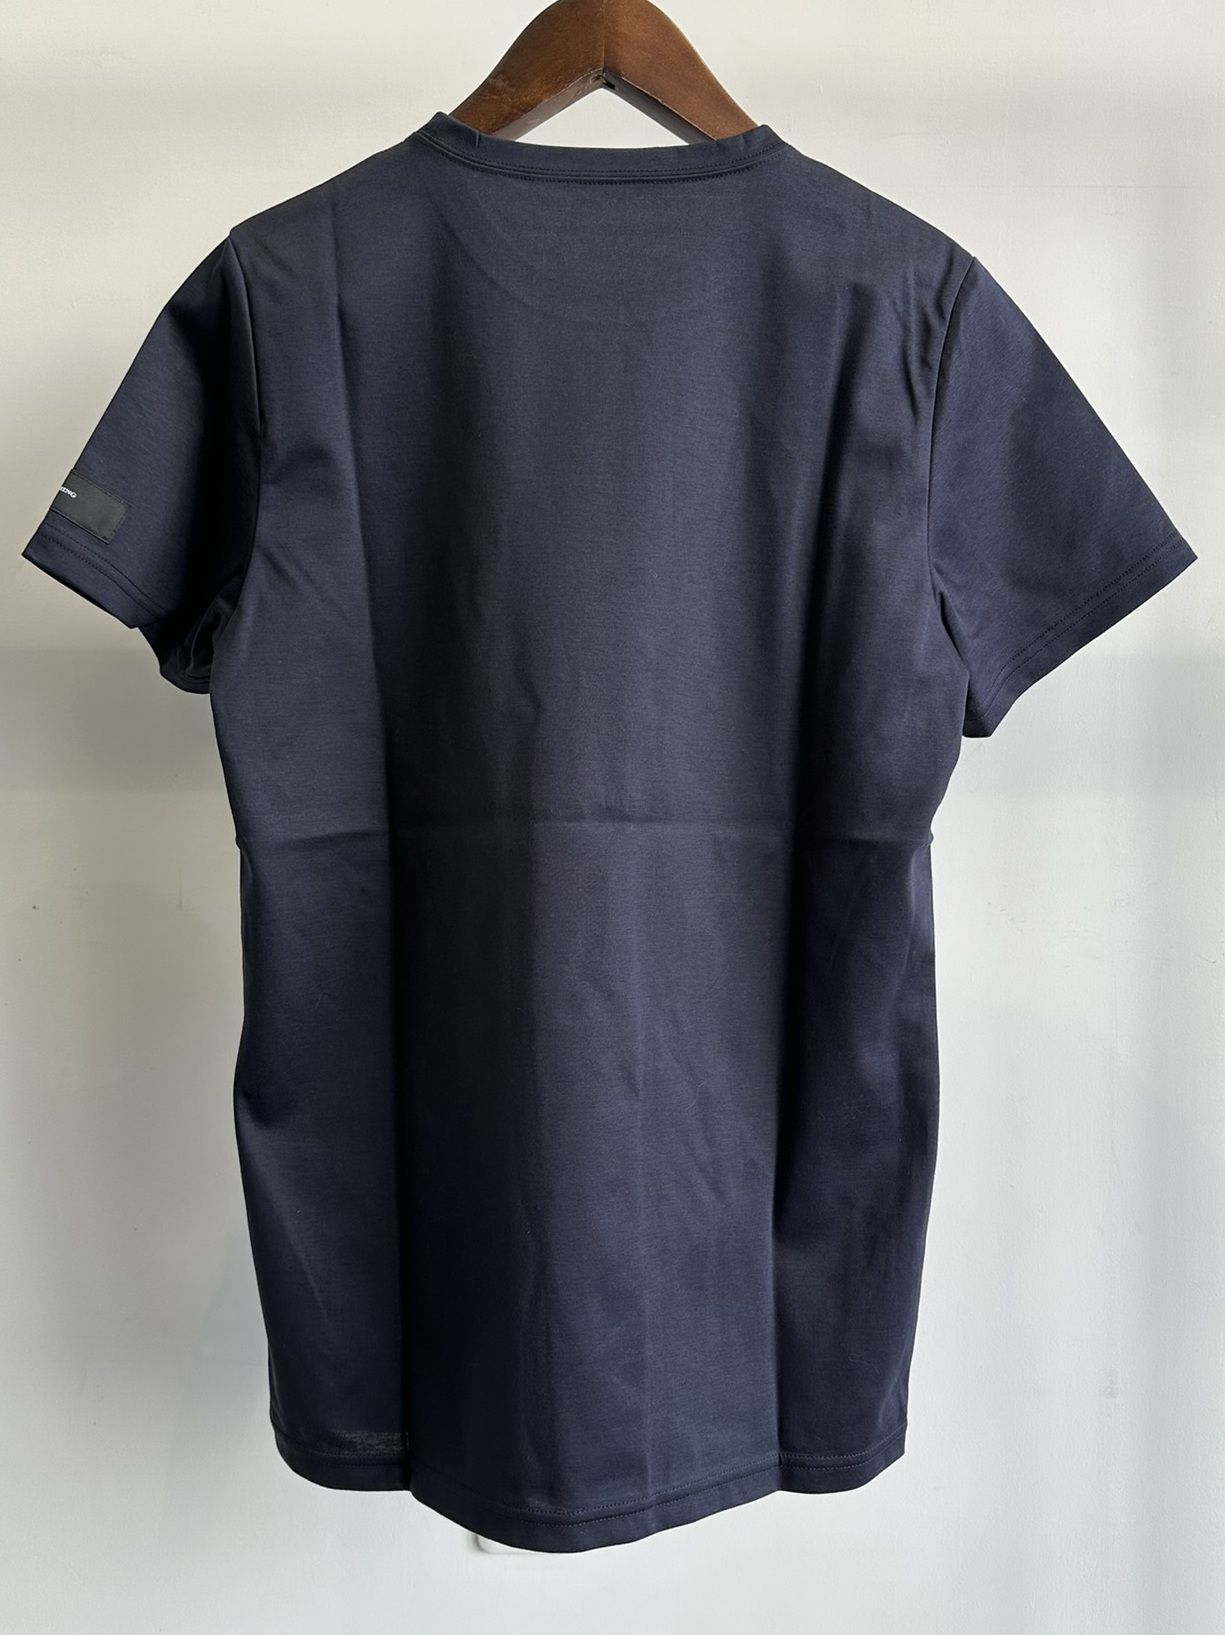 RESOUND CLOTHING - FINEST BASIC T / RC31-T-006 / 最高品質コットンTシャツ / ブラック | LUKE